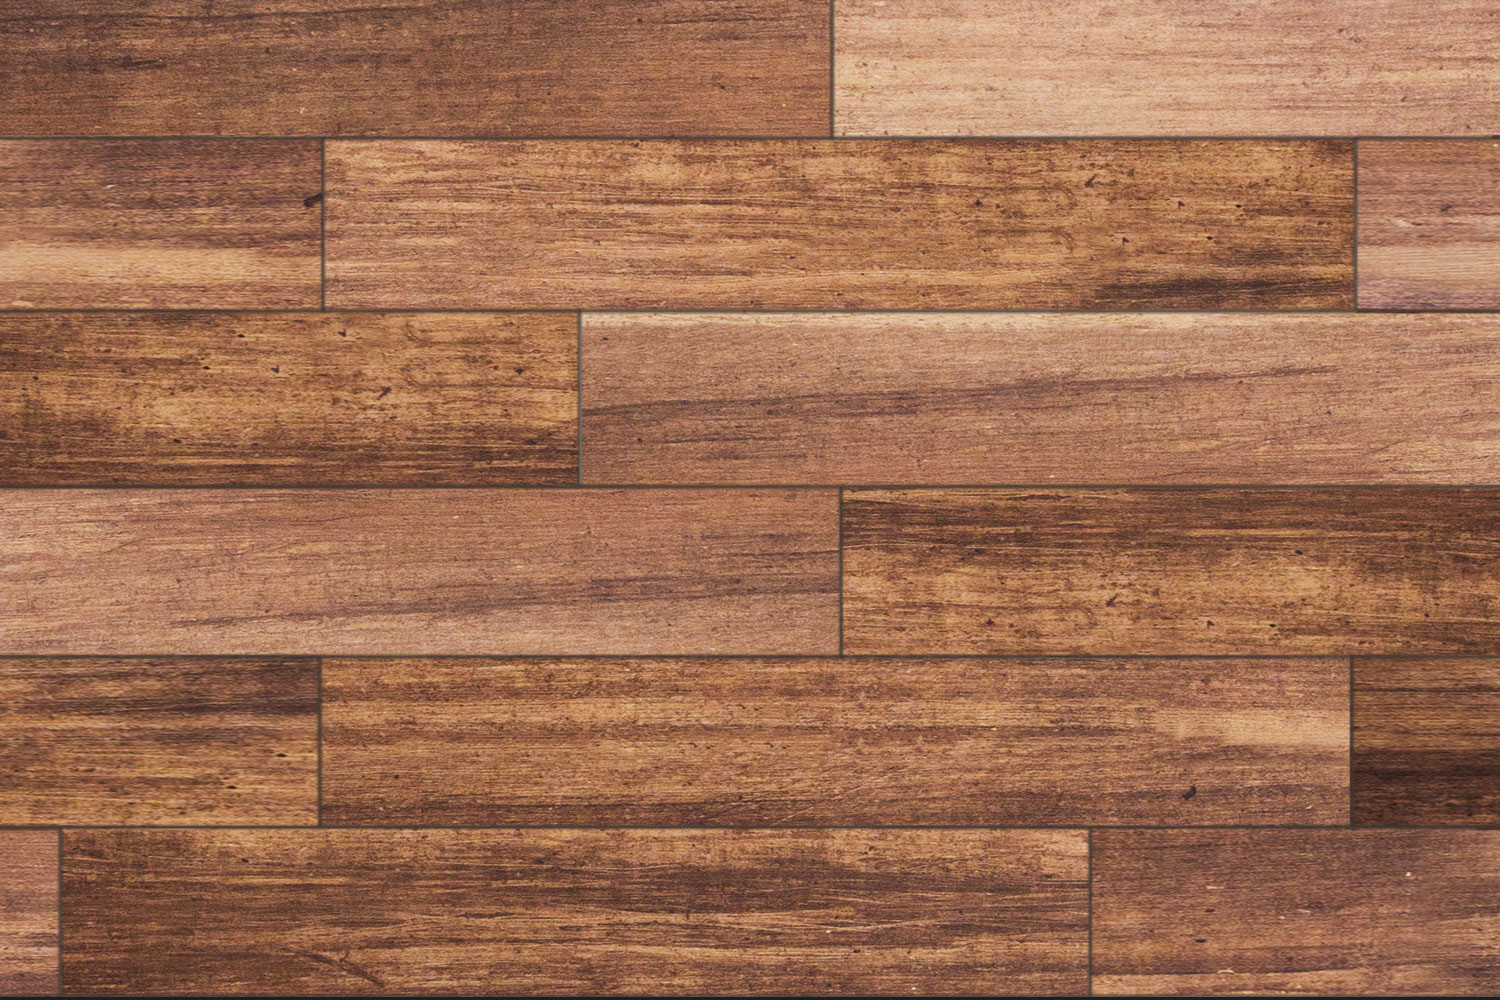 Wooden patterned floorboard